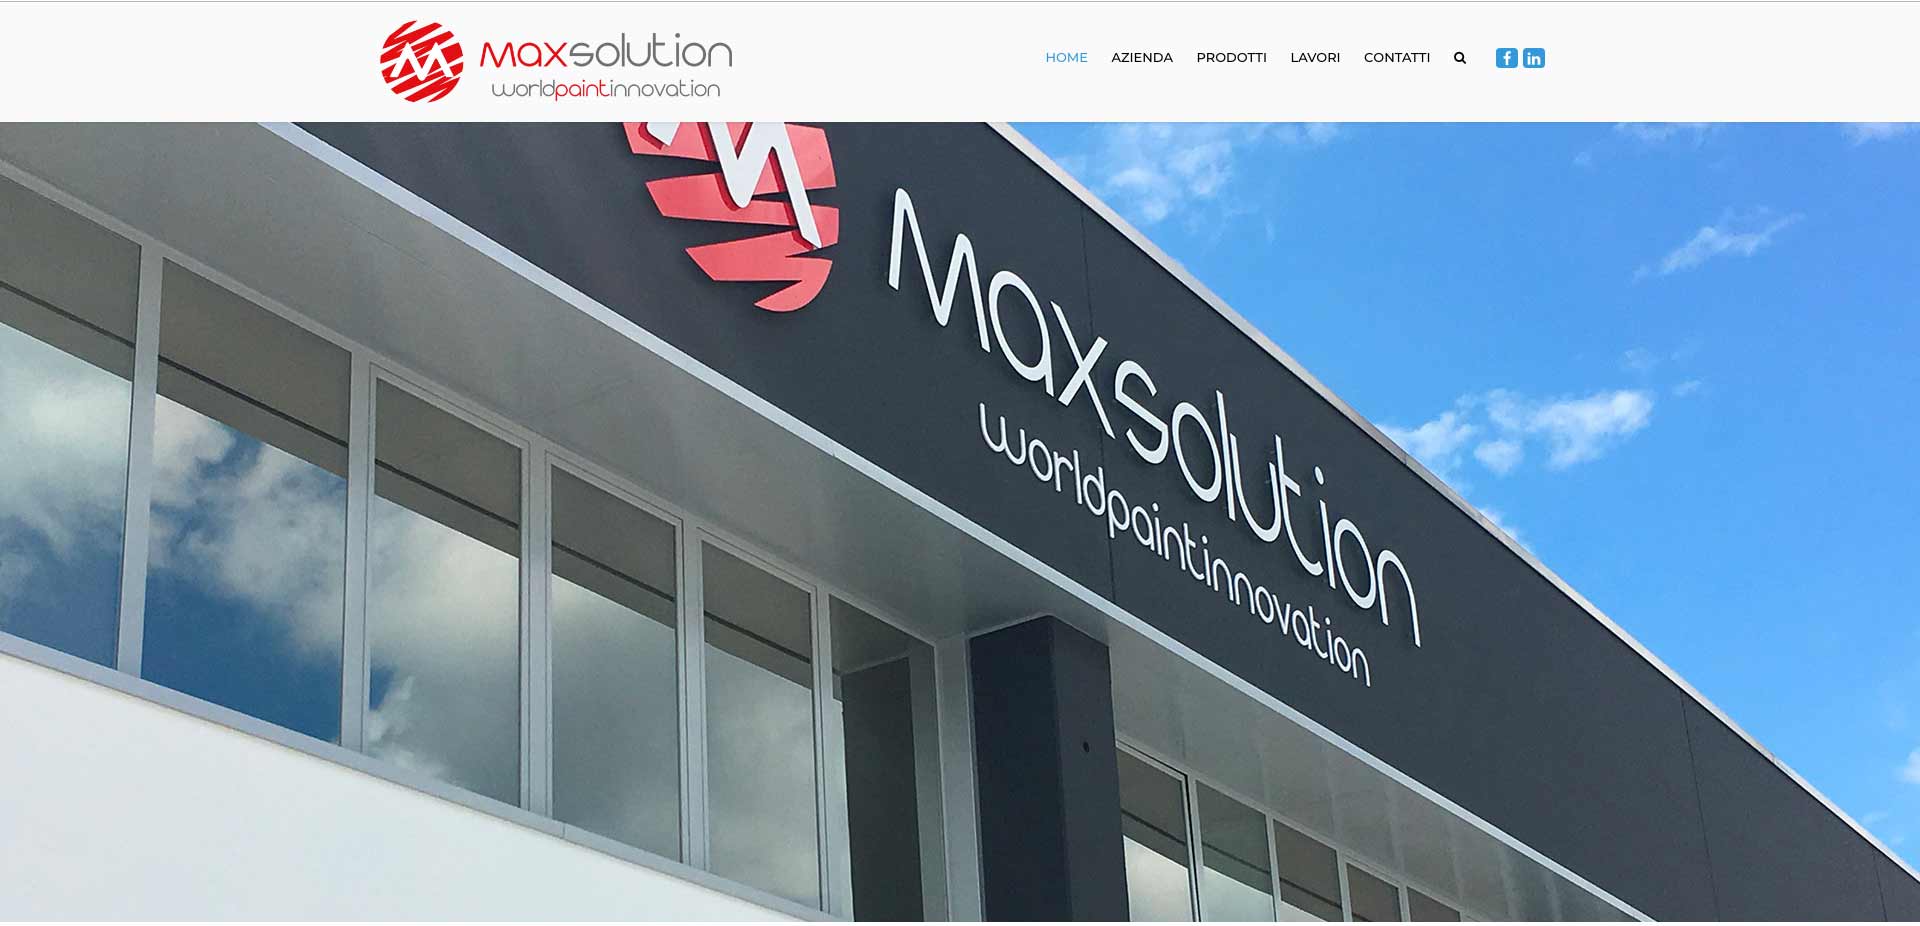 Max Solution - world paint innovation